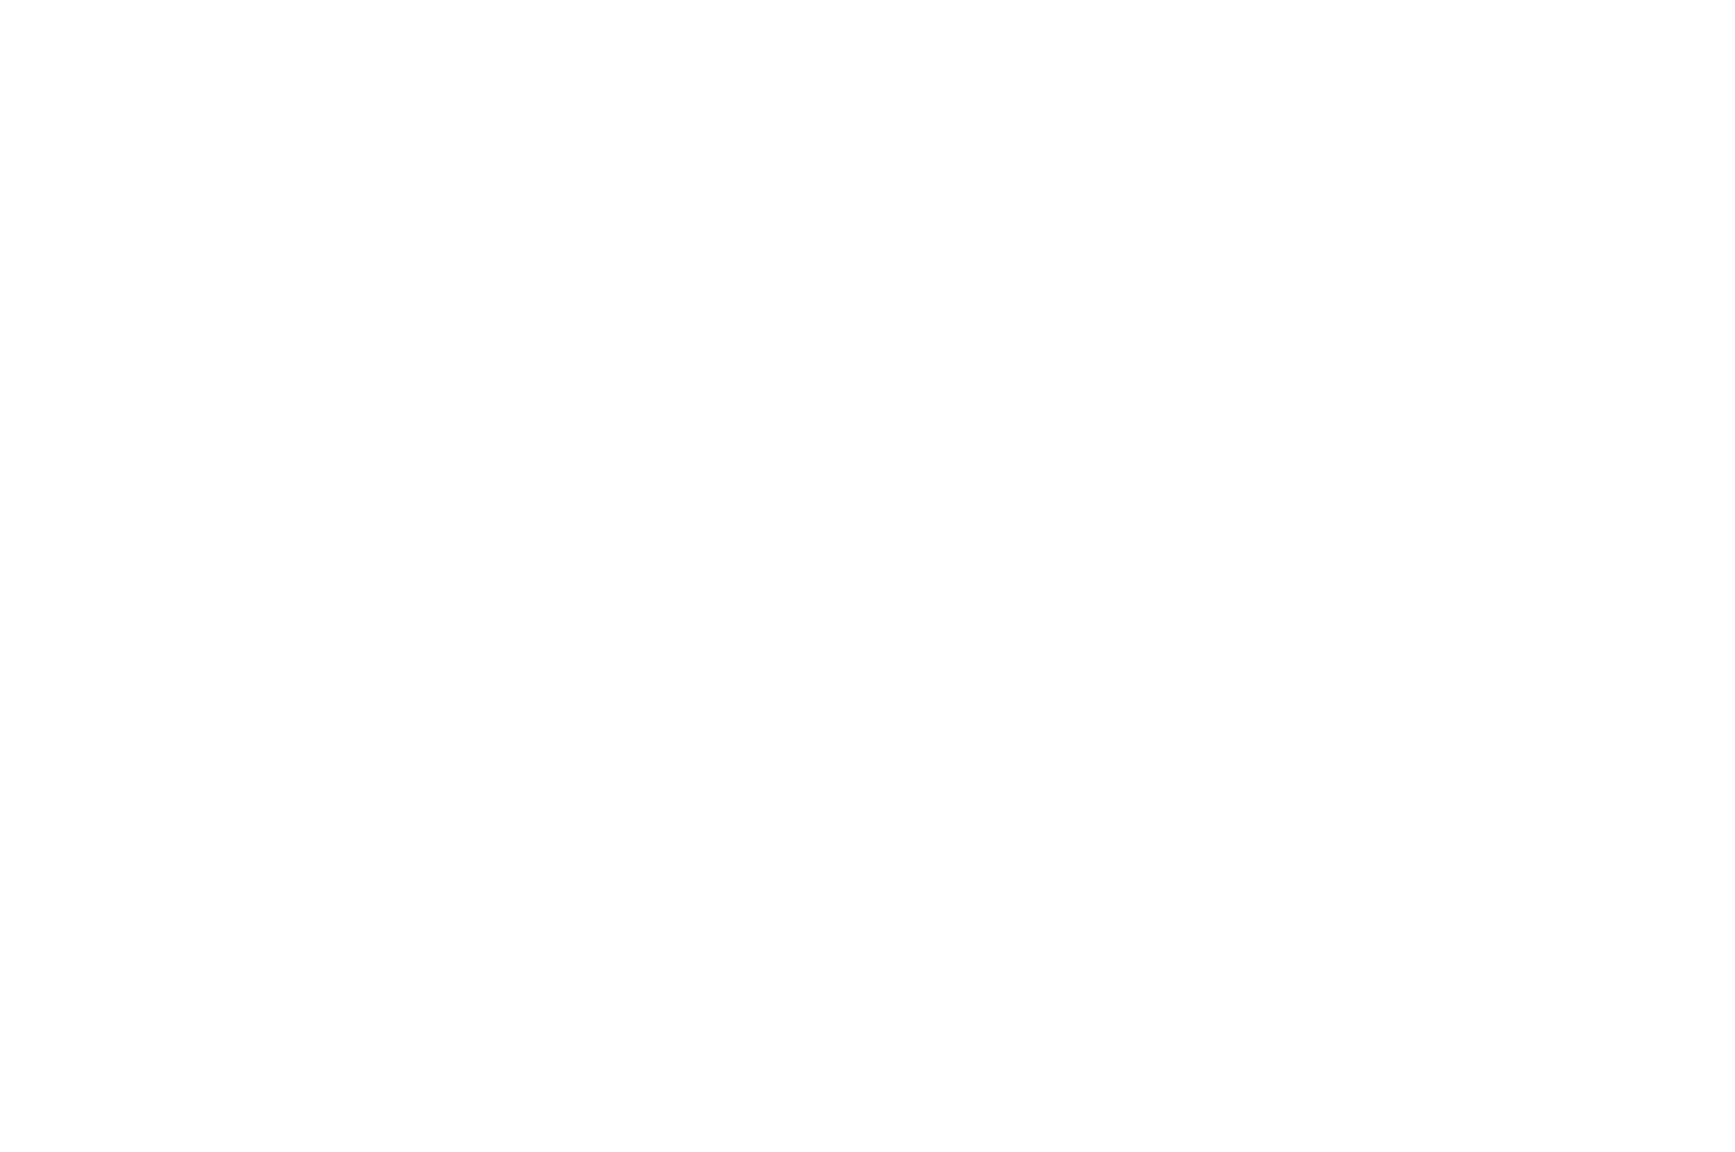 OFFICIAL SELECTION - WOODSTOCK FILM FESTIVAL - 2021